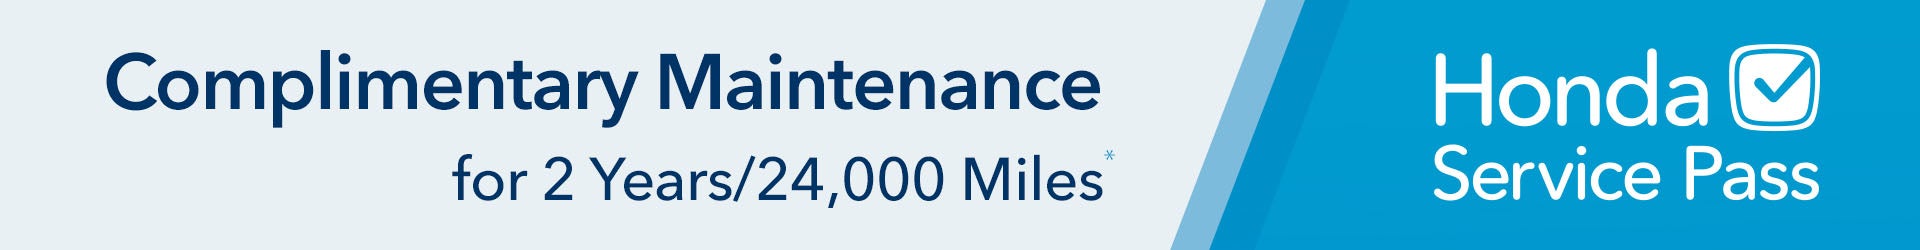 Complimentary Maintenance for 2 years / 24,000 Miles Honda Service Pass | Venice Honda in Venice FL